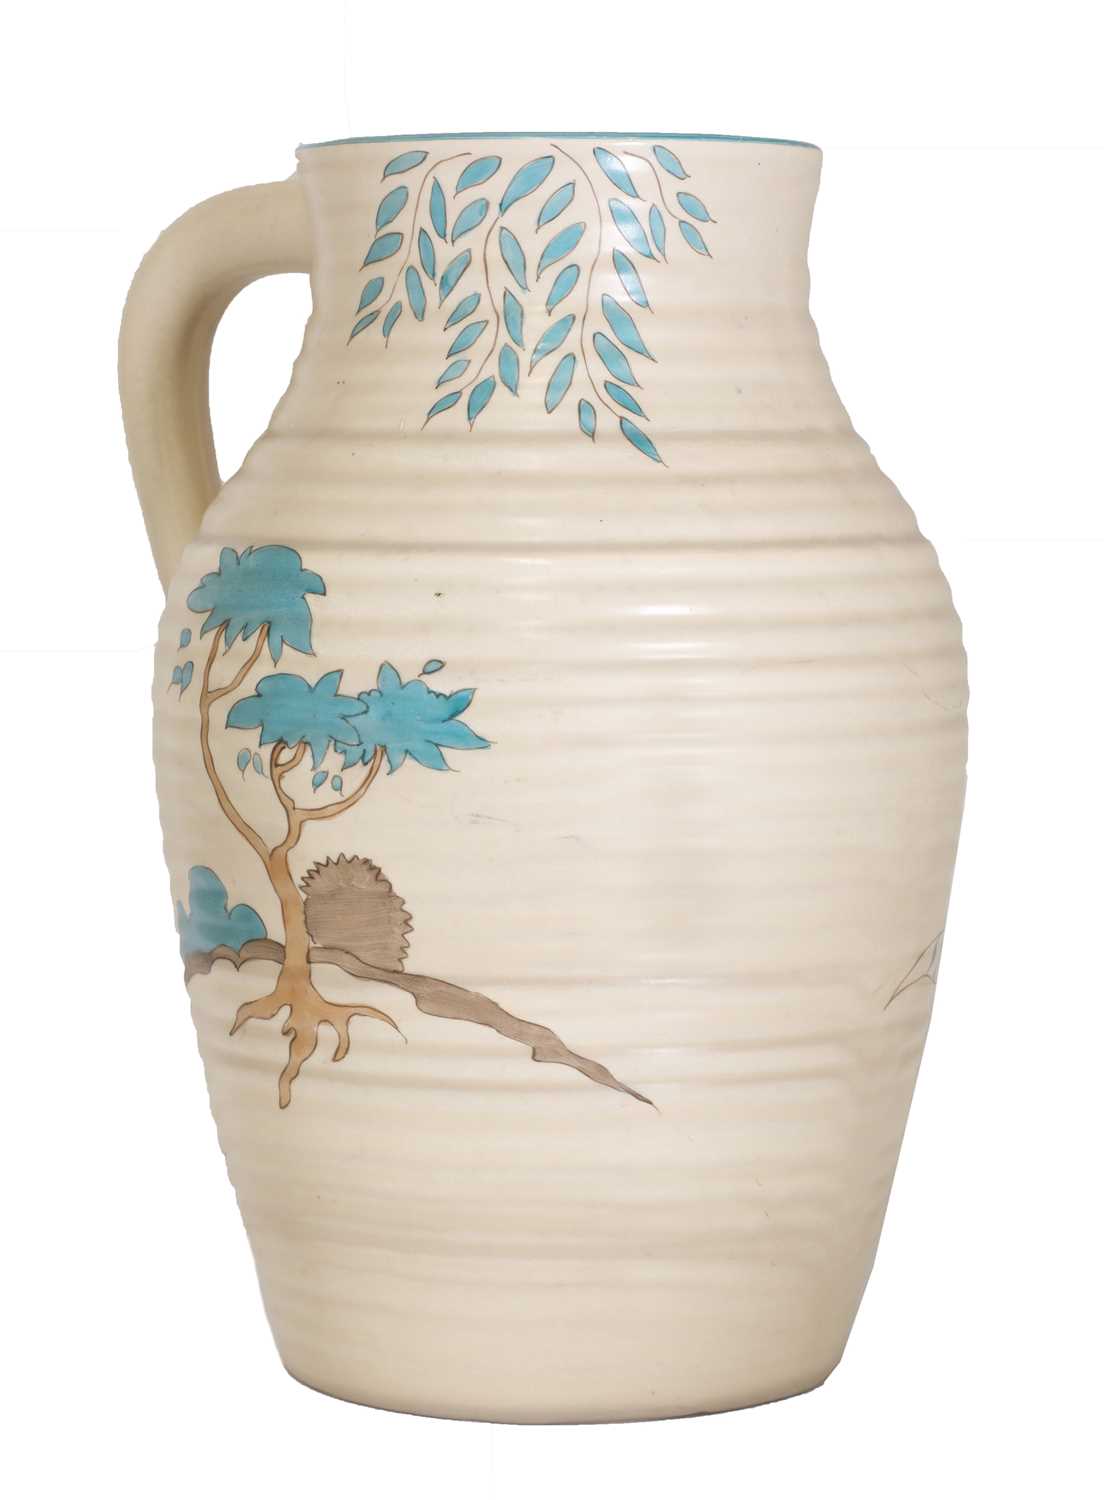 A Clarice Cliff 'Mowcop' Lotus jug, - Image 2 of 3